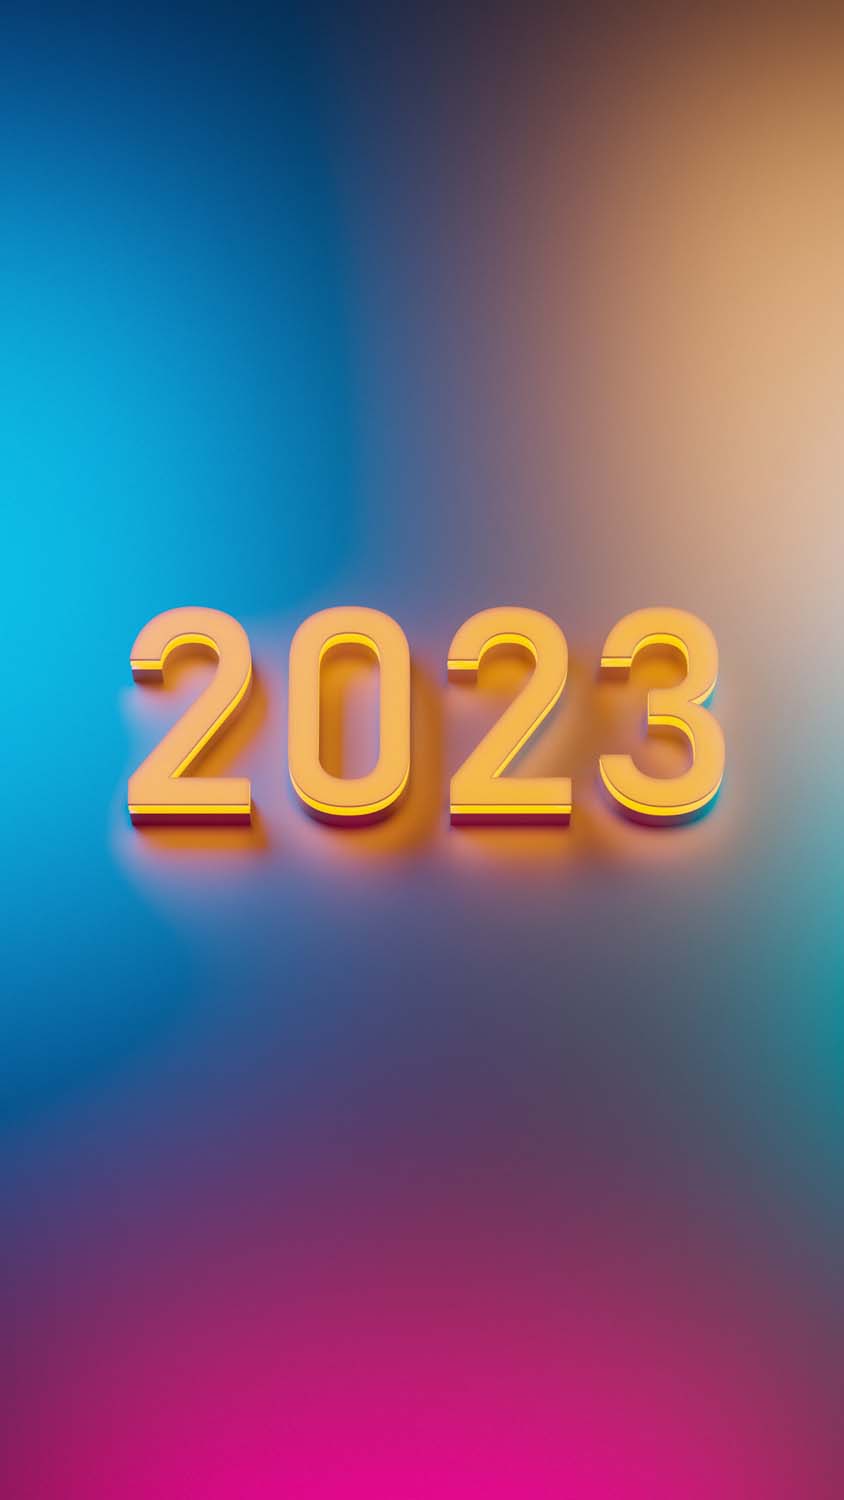 2023 iPhone Wallpaper HD 1